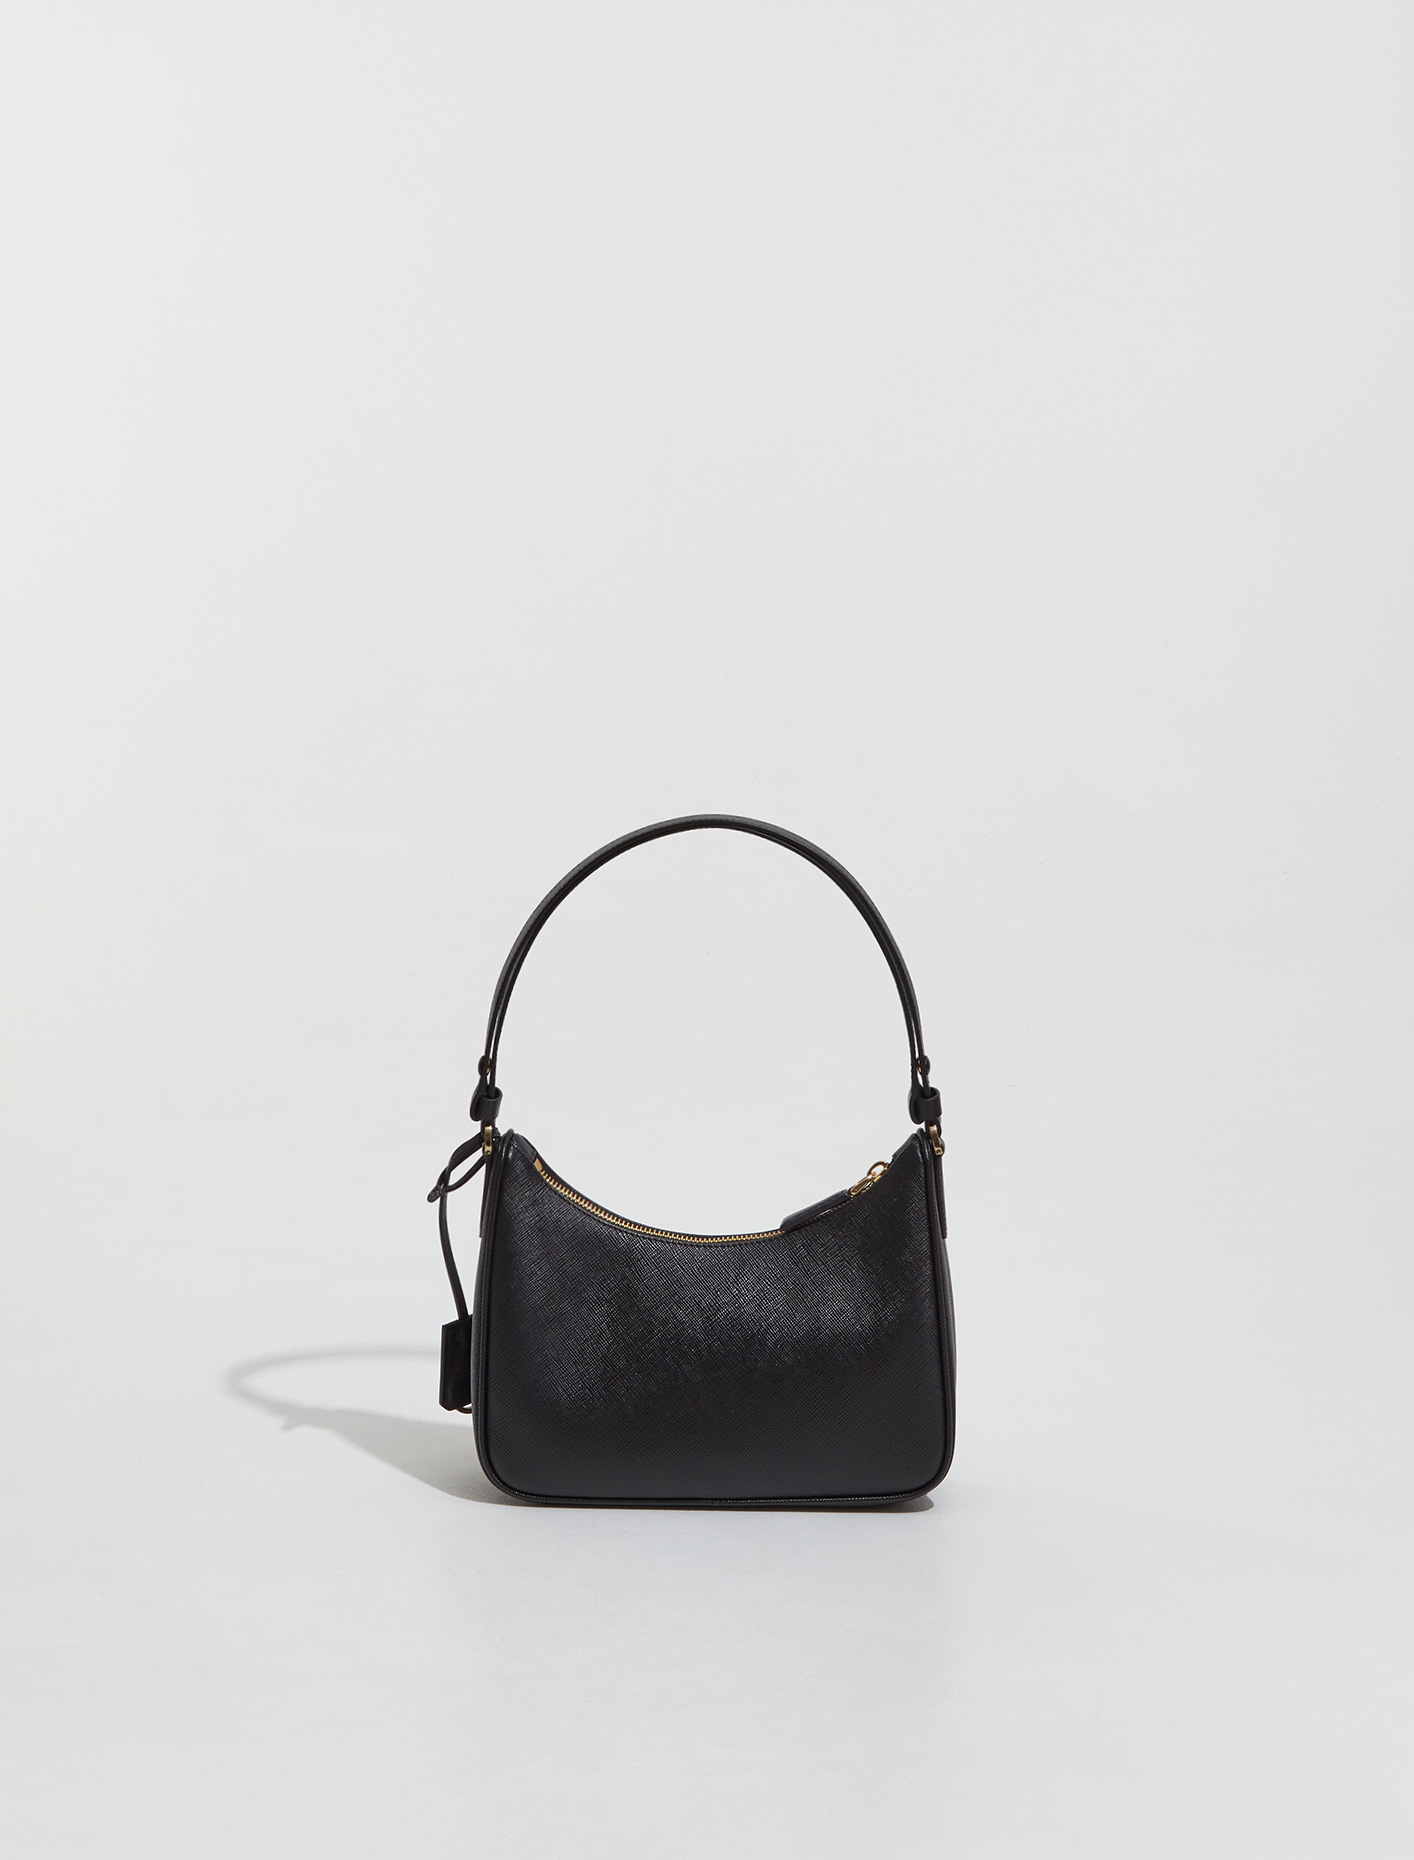 Prada Saffiano Leather Mini-Bag in Black | Voo Store Berlin | Worldwide ...